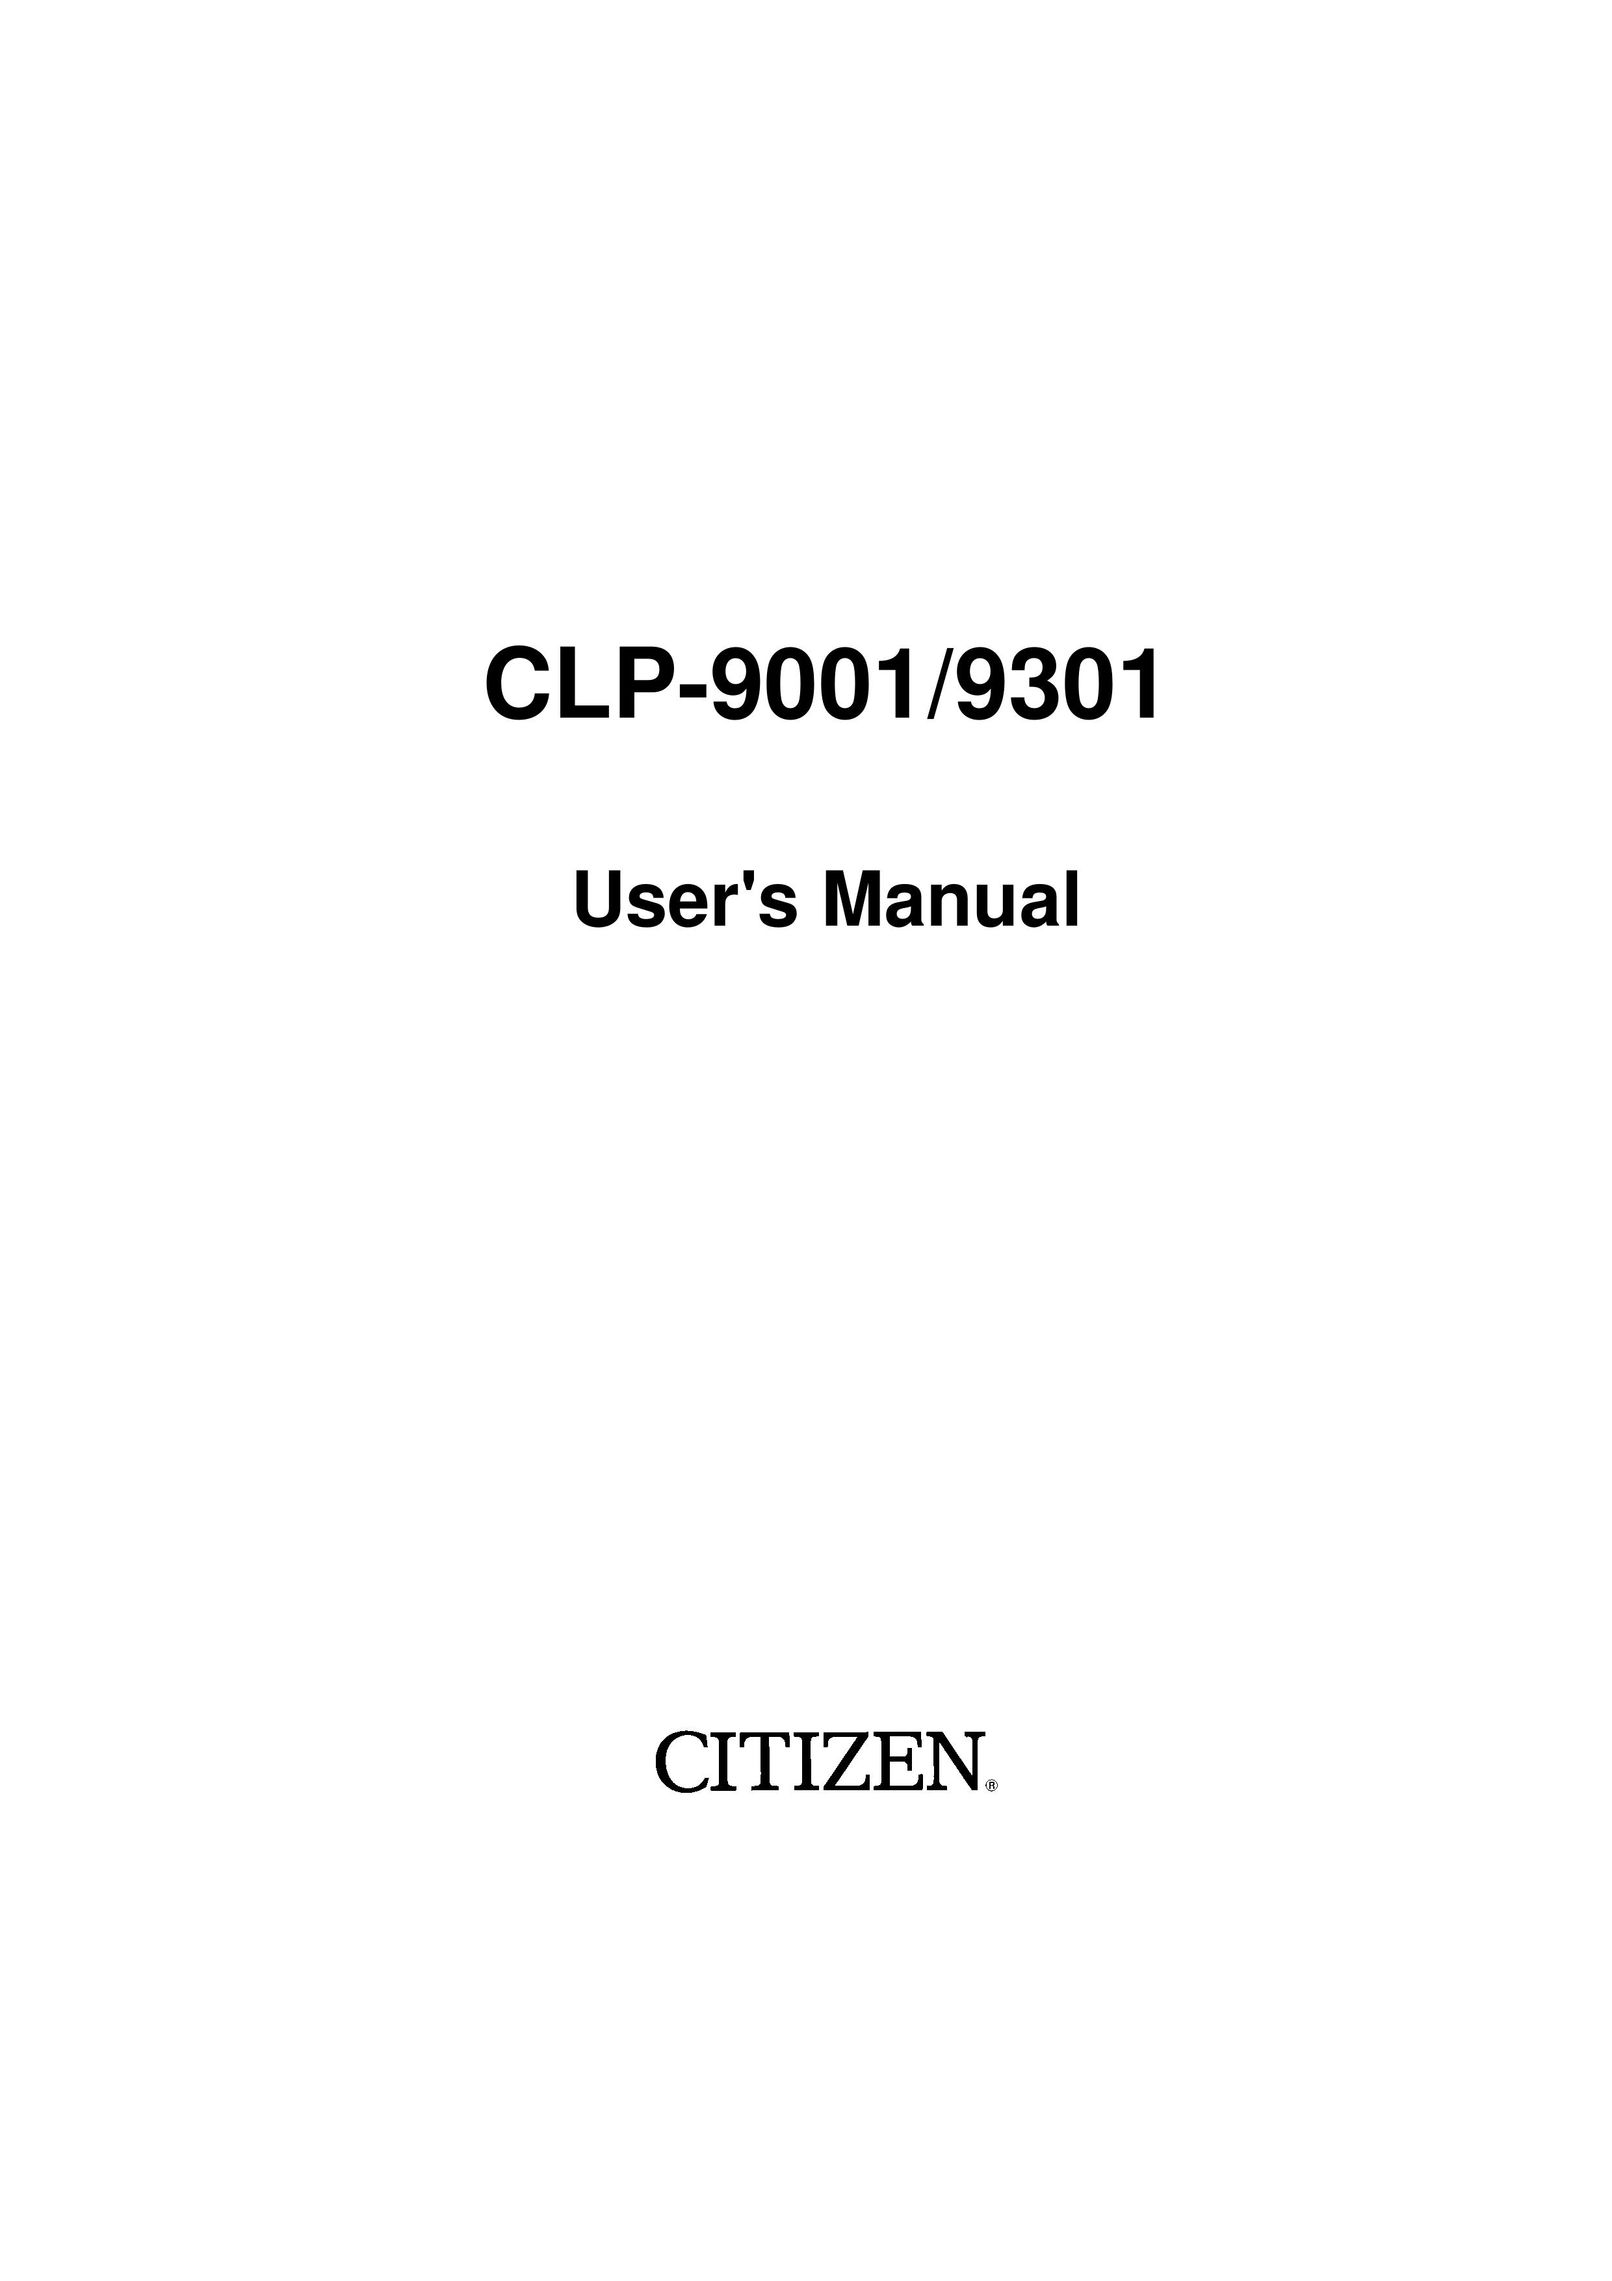 Citizen Systems CLP-9301 Printer User Manual